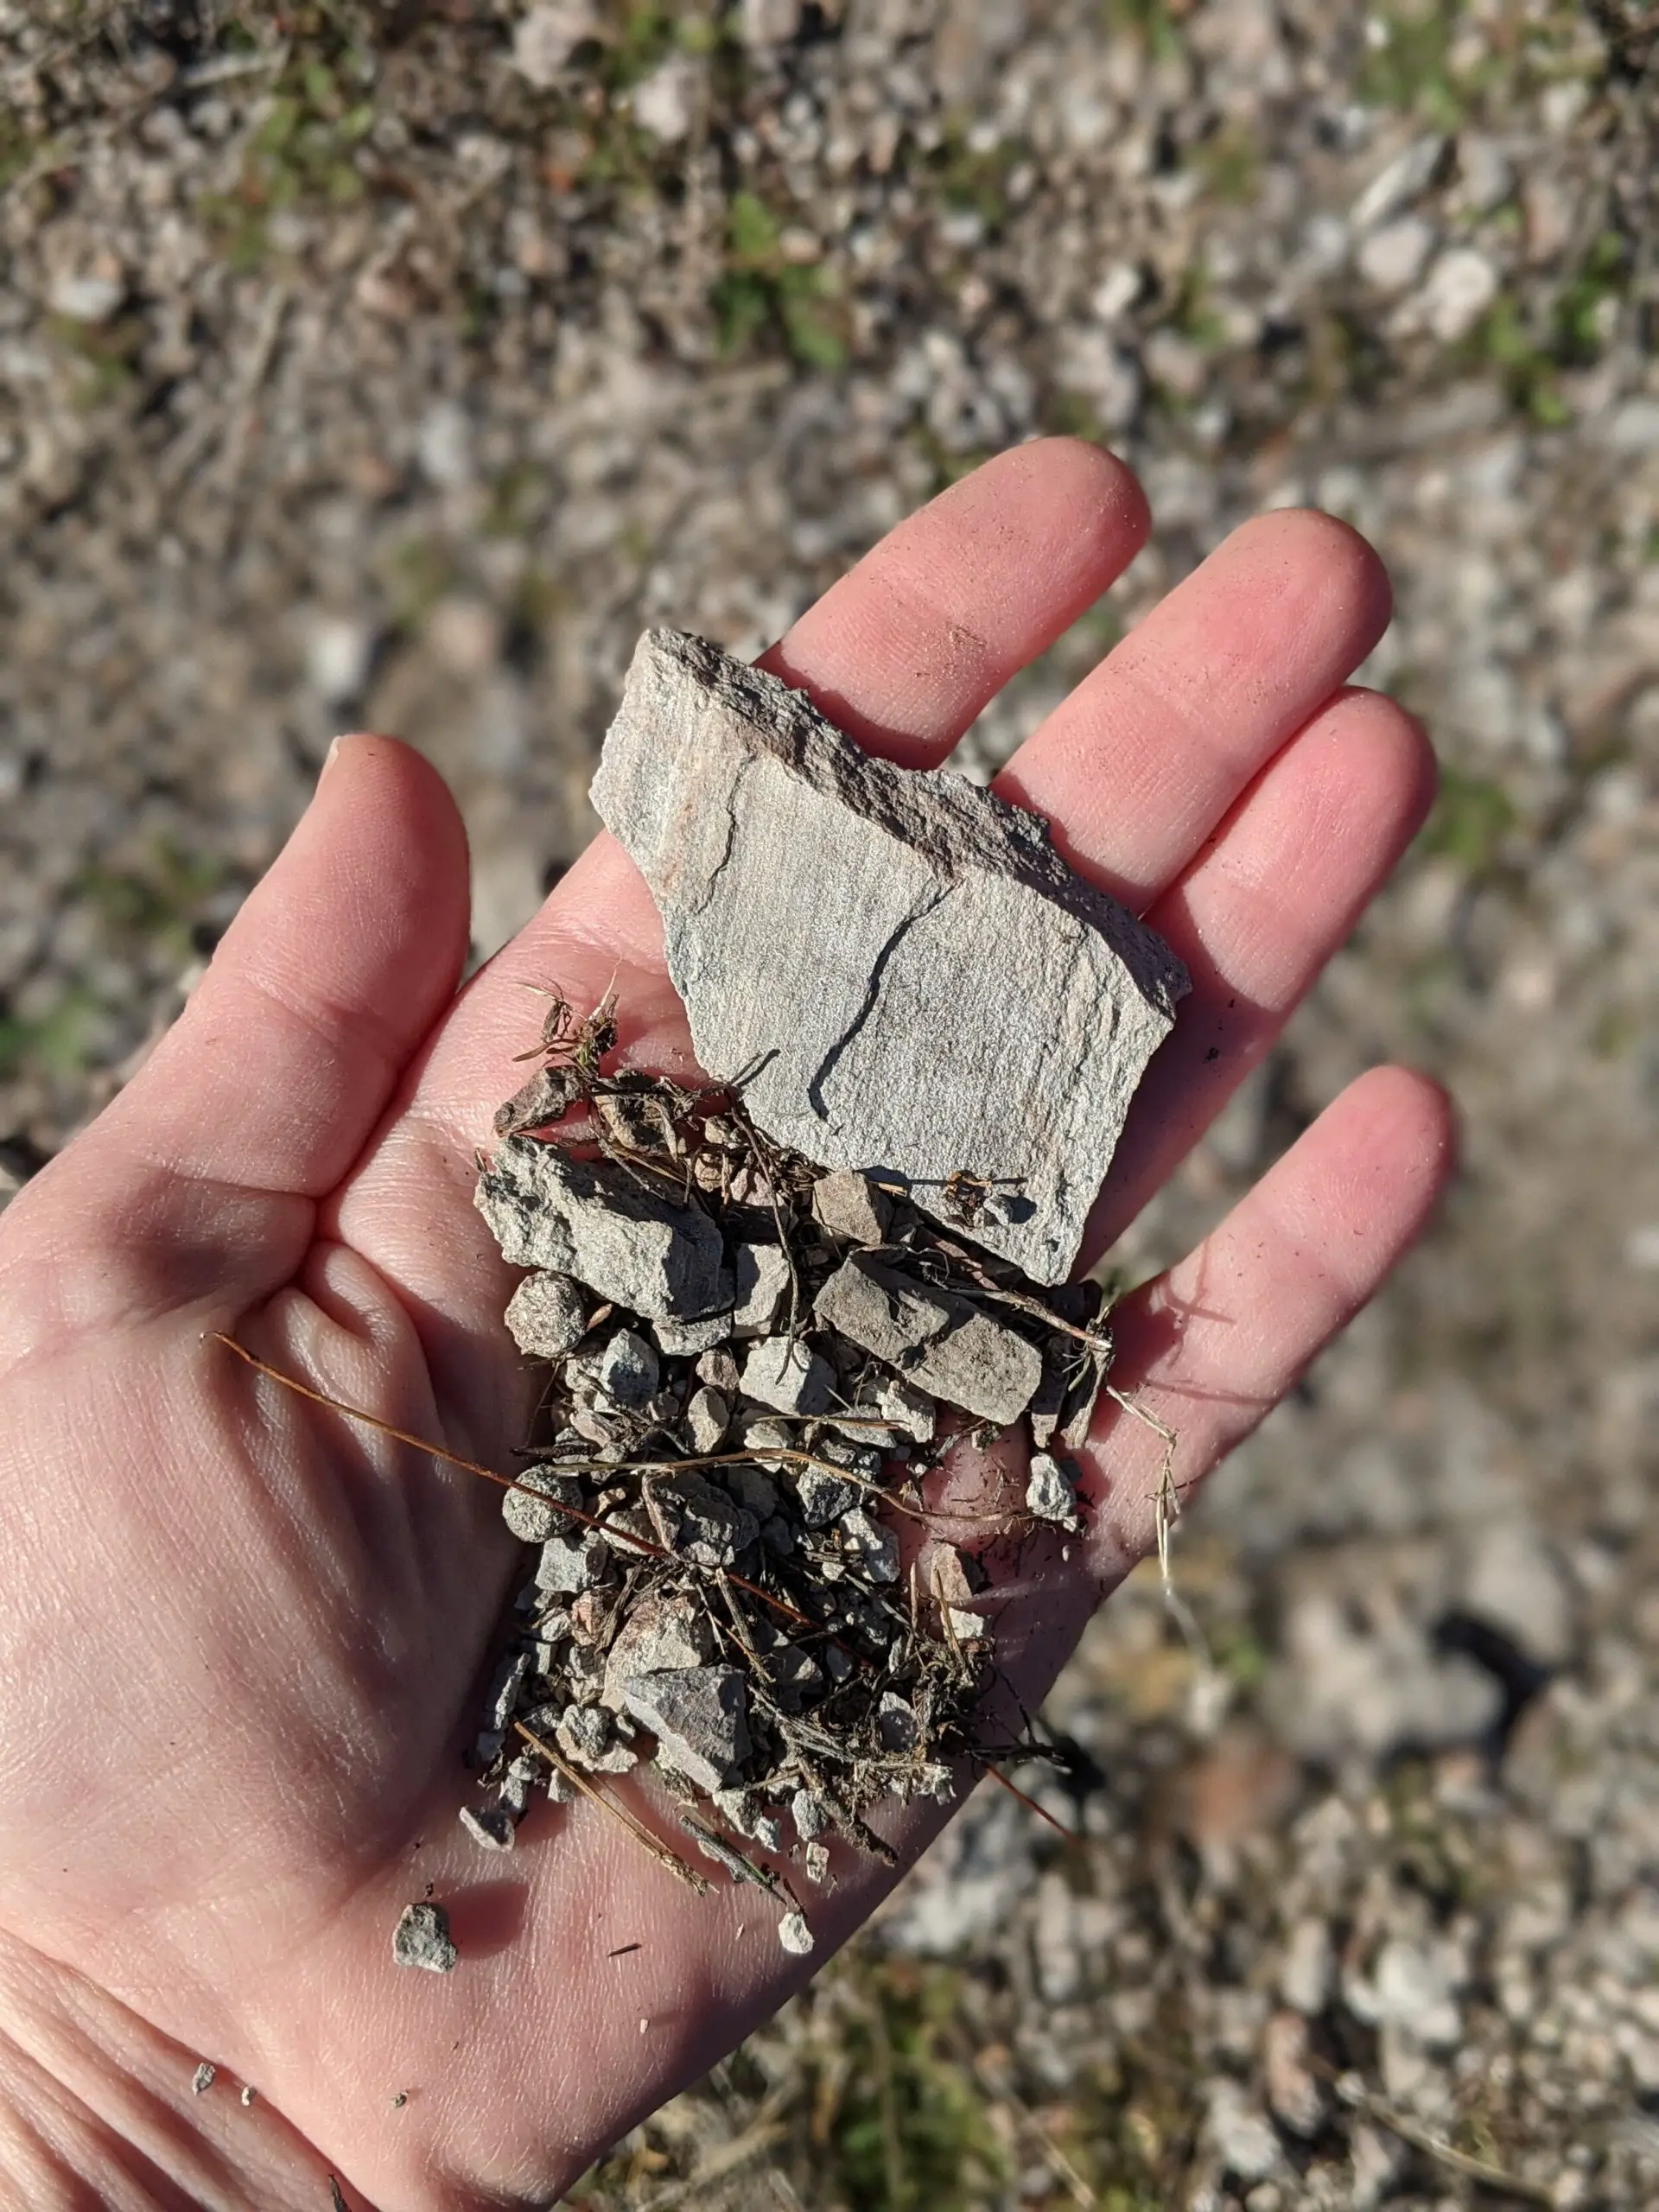 vineyard soil - rocks